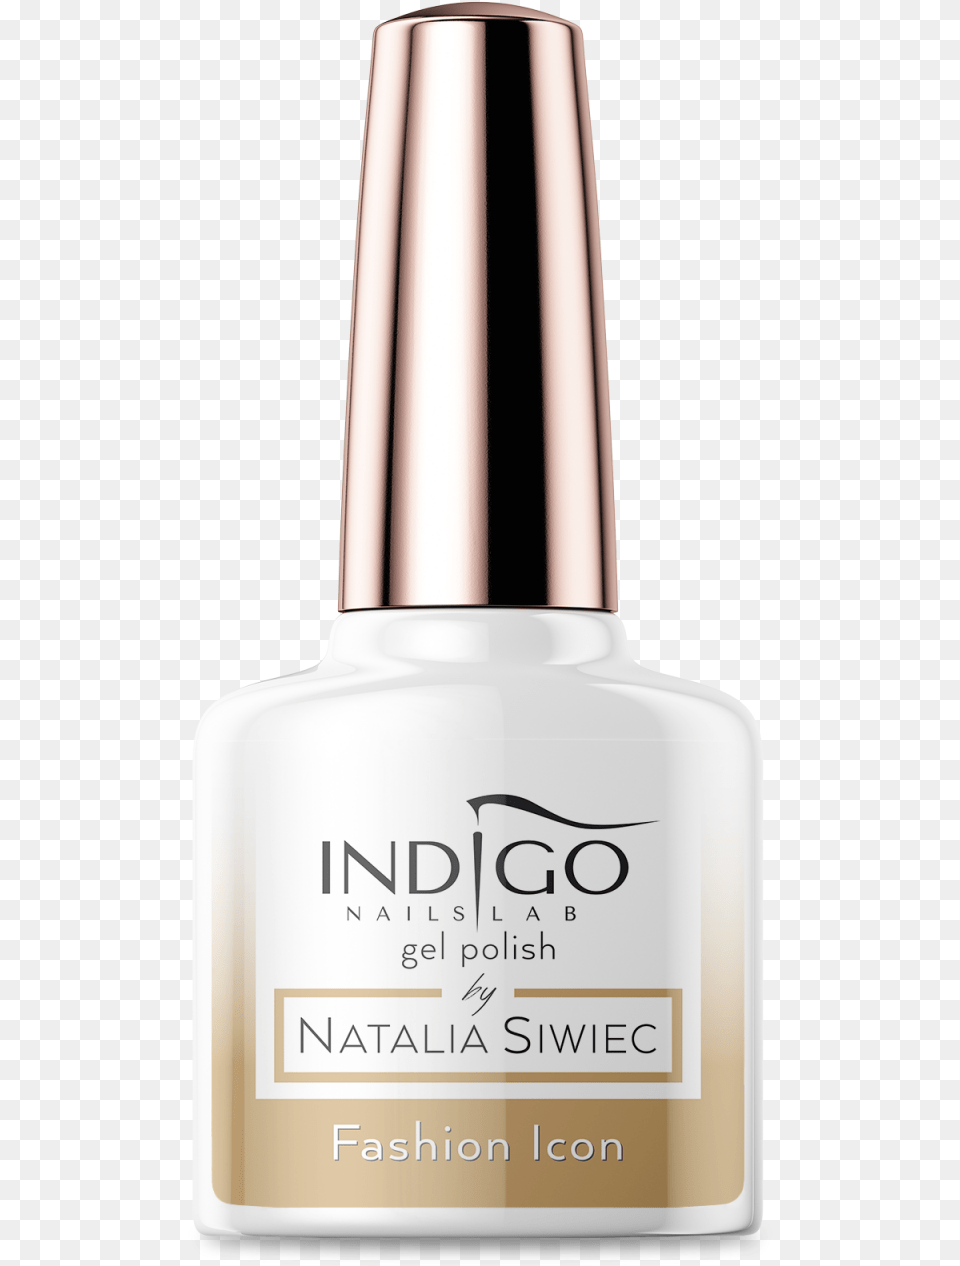 Fashion Icon Gel Polish By Natalia Siwiec 7ml Indigo Nails, Cosmetics, Bottle, Shaker Free Png